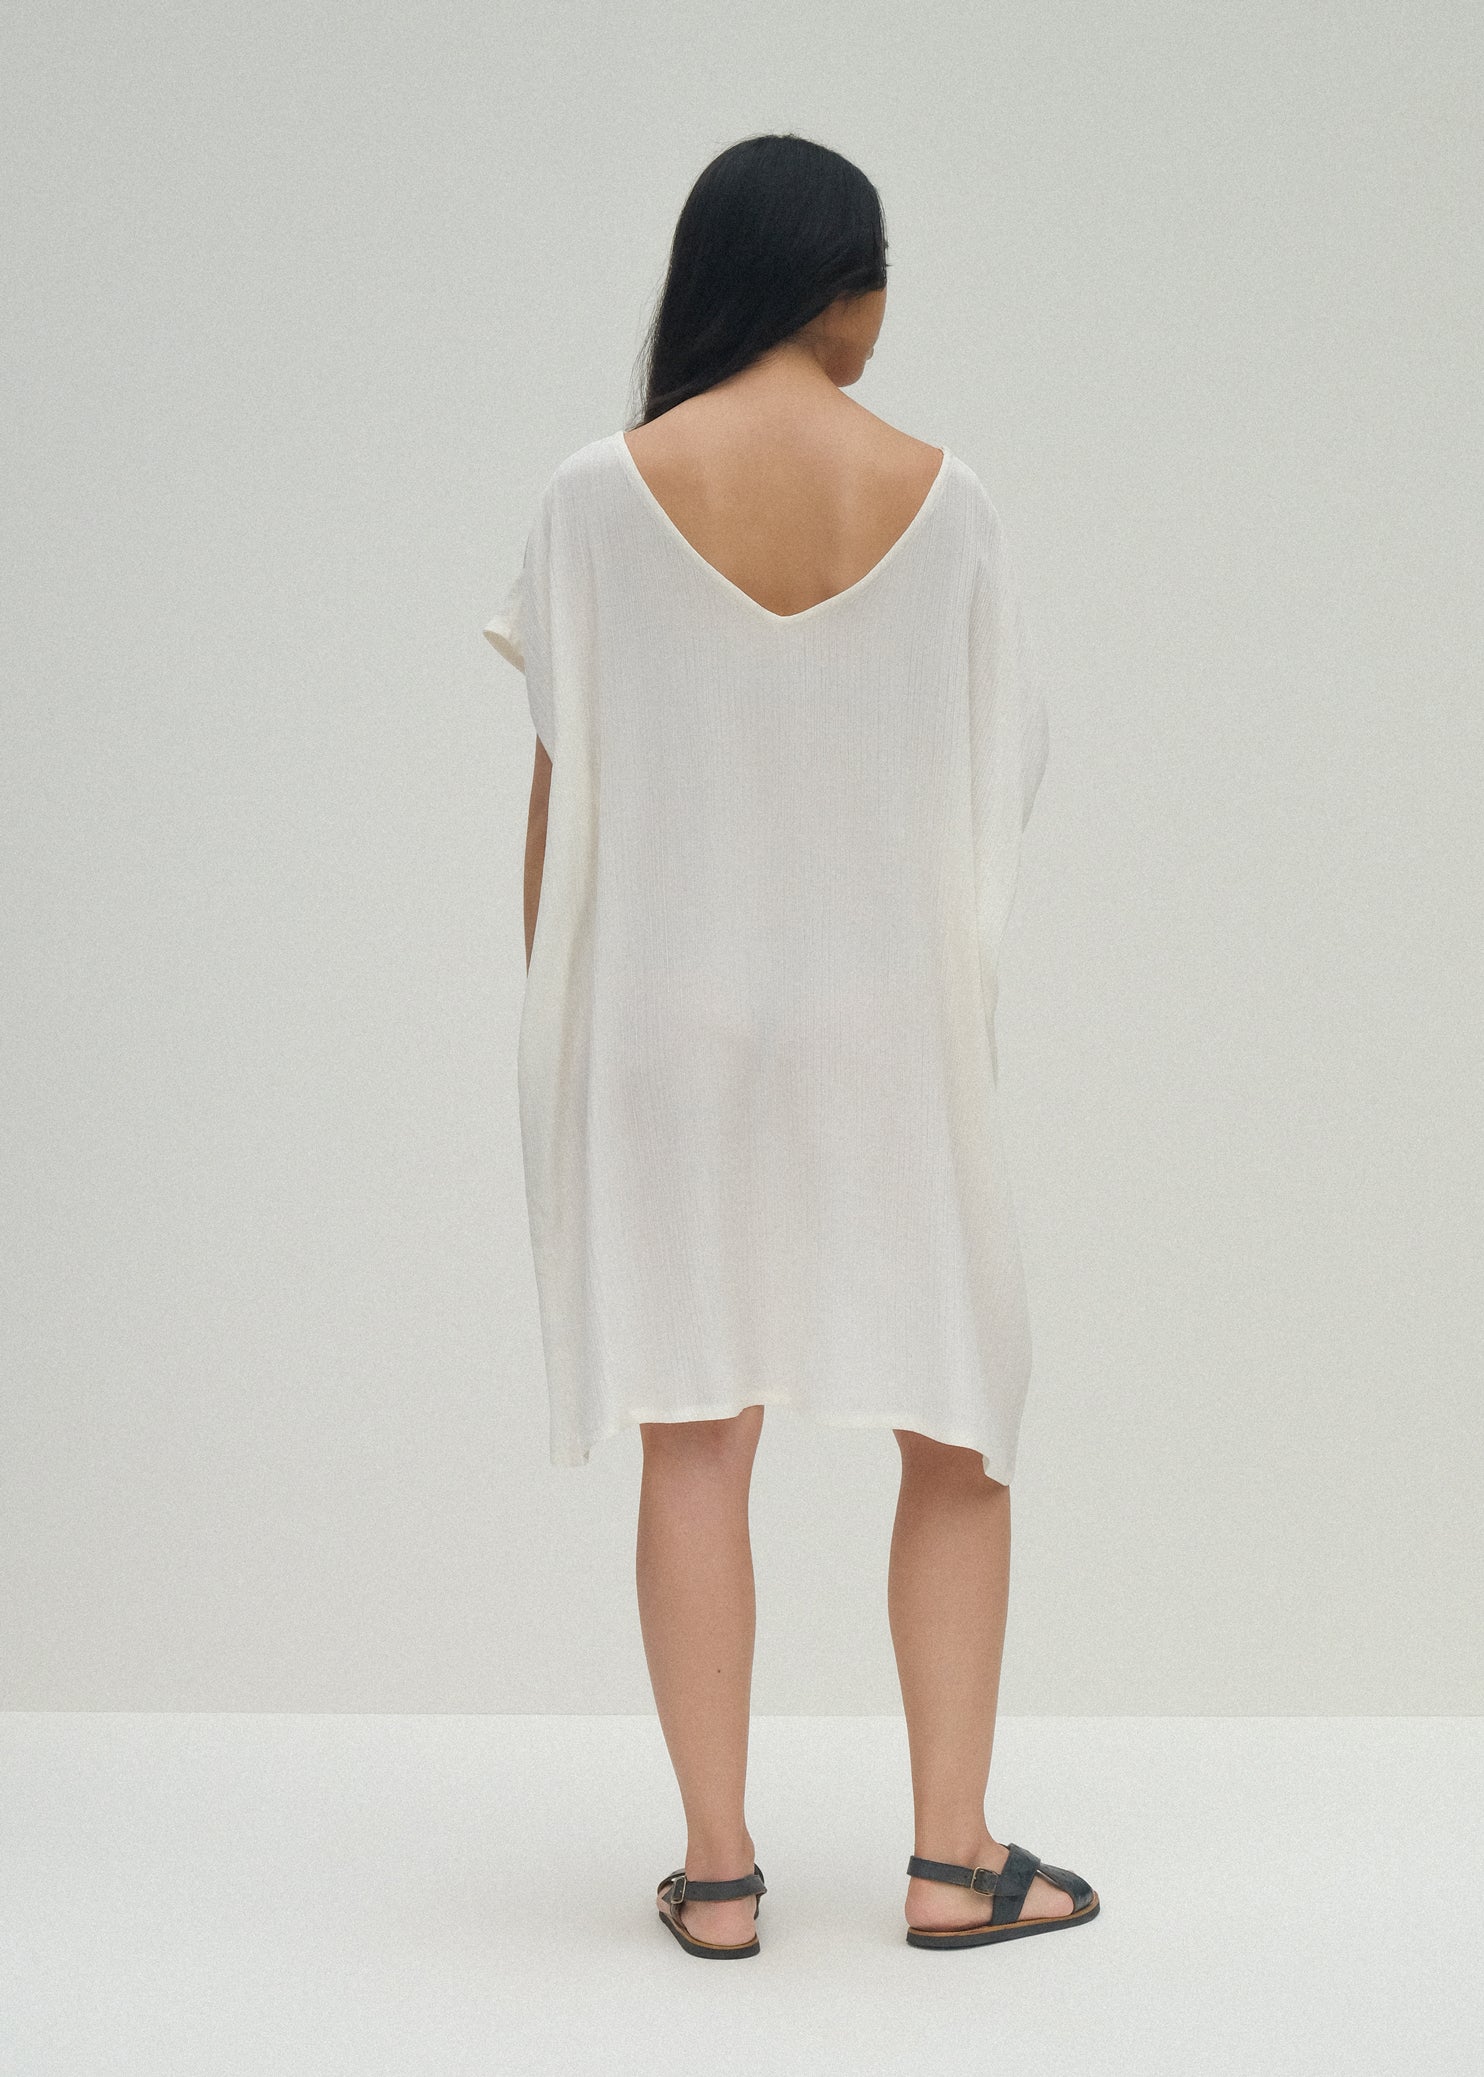 Sack Dress - Ivory